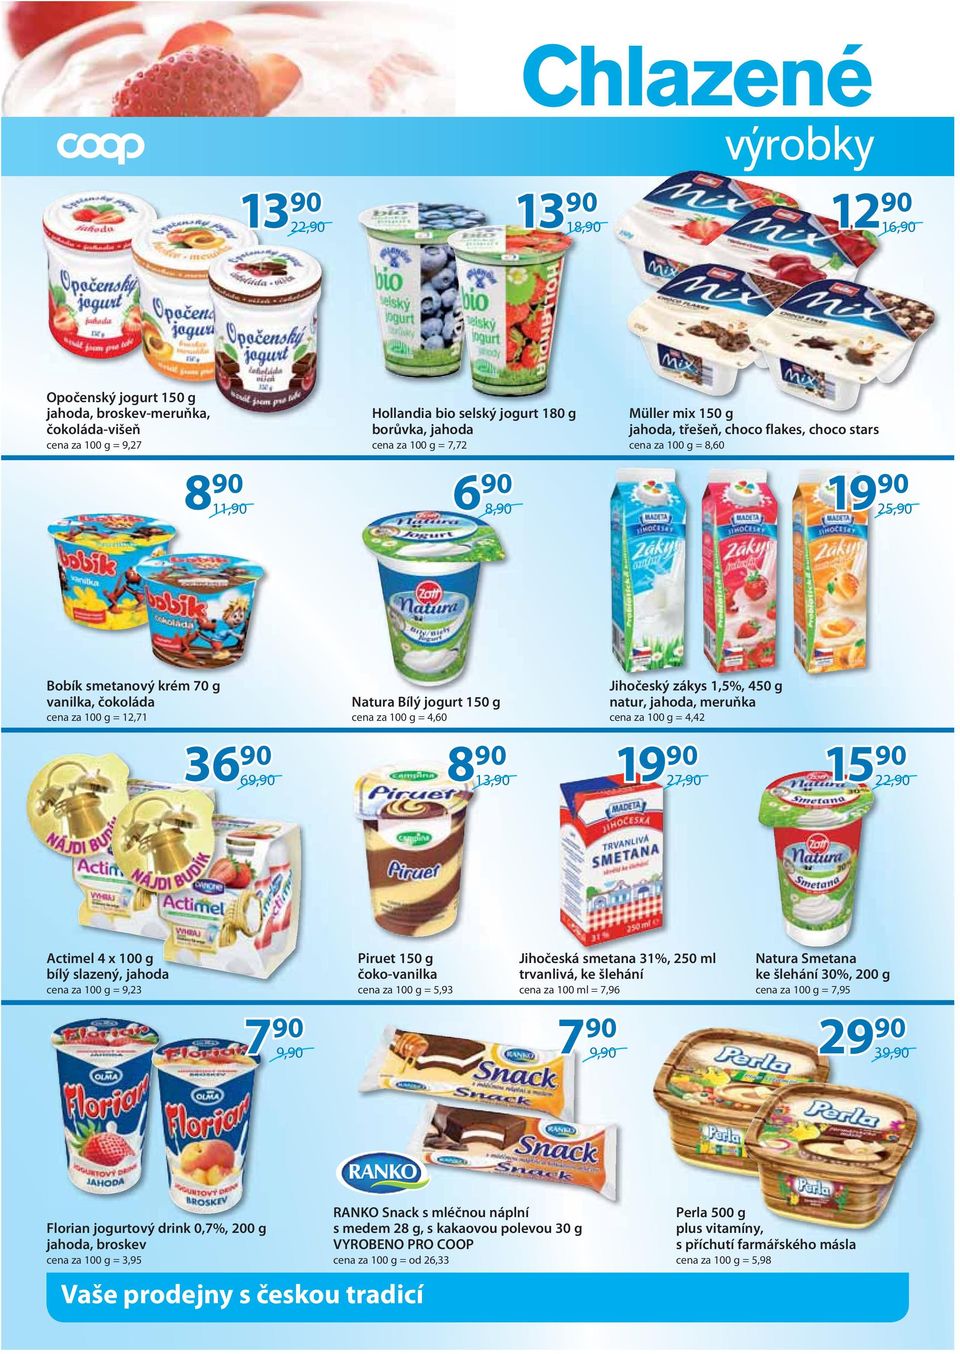 jogurt 150 g cena za 100 g = 4,60 8 90 Jihočeský zákys 1,5%, 450 g natur, jahoda, meruňka cena za 100 g = 4,42 27,90 15 90 22,90 Actimel 4 x 100 g bílý slazený, jahoda cena za 100 g = 9,23 7 90 9,90